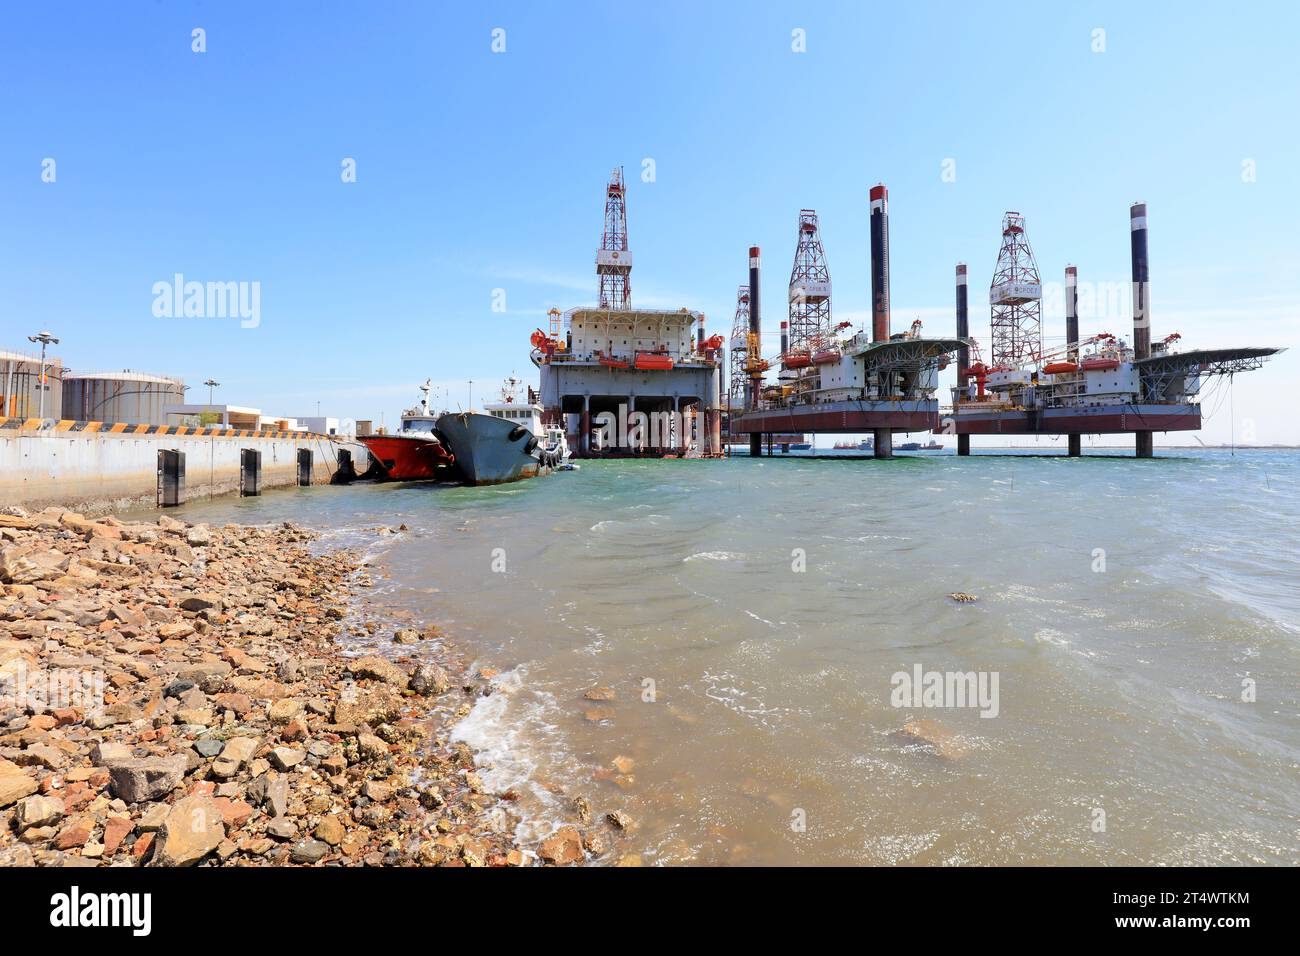 Caofeidian - avril 17 : plate-forme de forage en mer, 17 avril 2016, caofeidian, province du hebei, Chine Banque D'Images